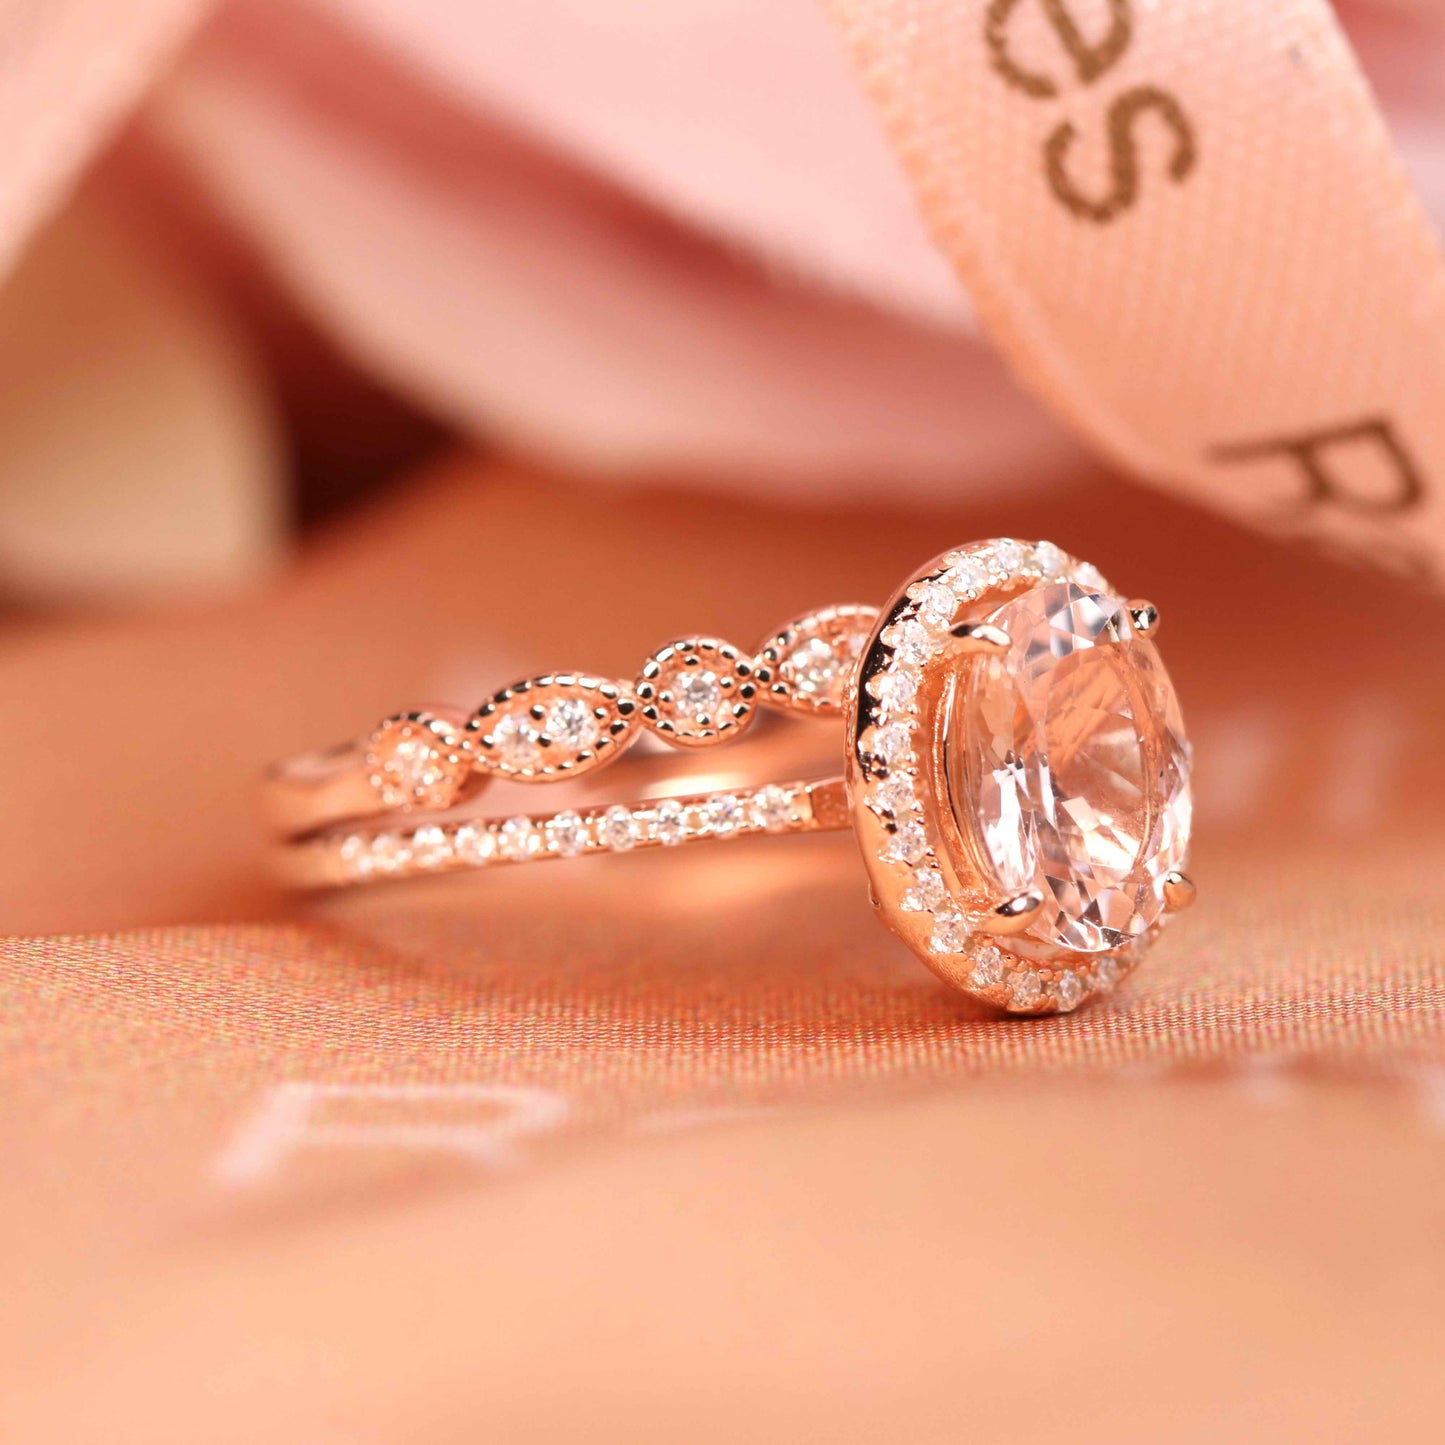 Antique 1.65 carat Oval Cut Morganite Wedding Bridal Ring Set with Artdeco Diamond Wedding Band